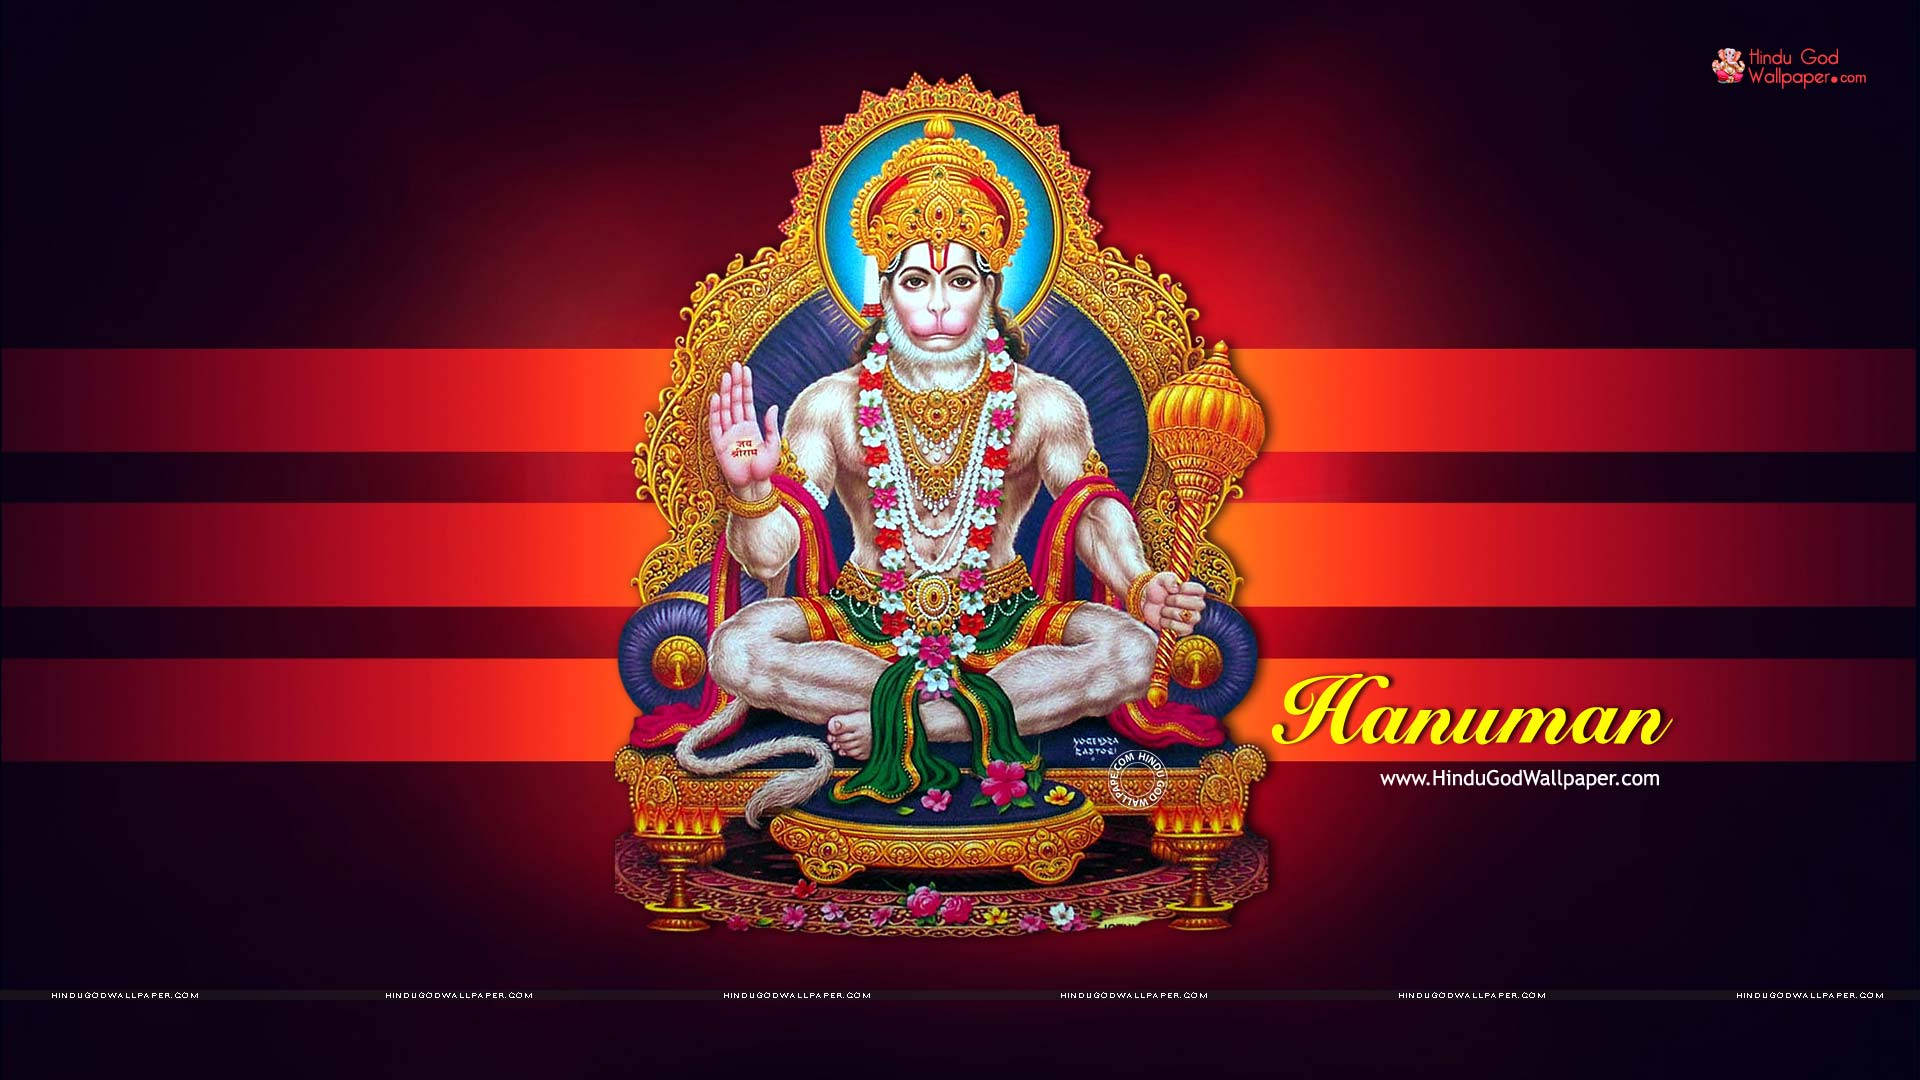 Argahanuman Hinduistisk Gud. Wallpaper